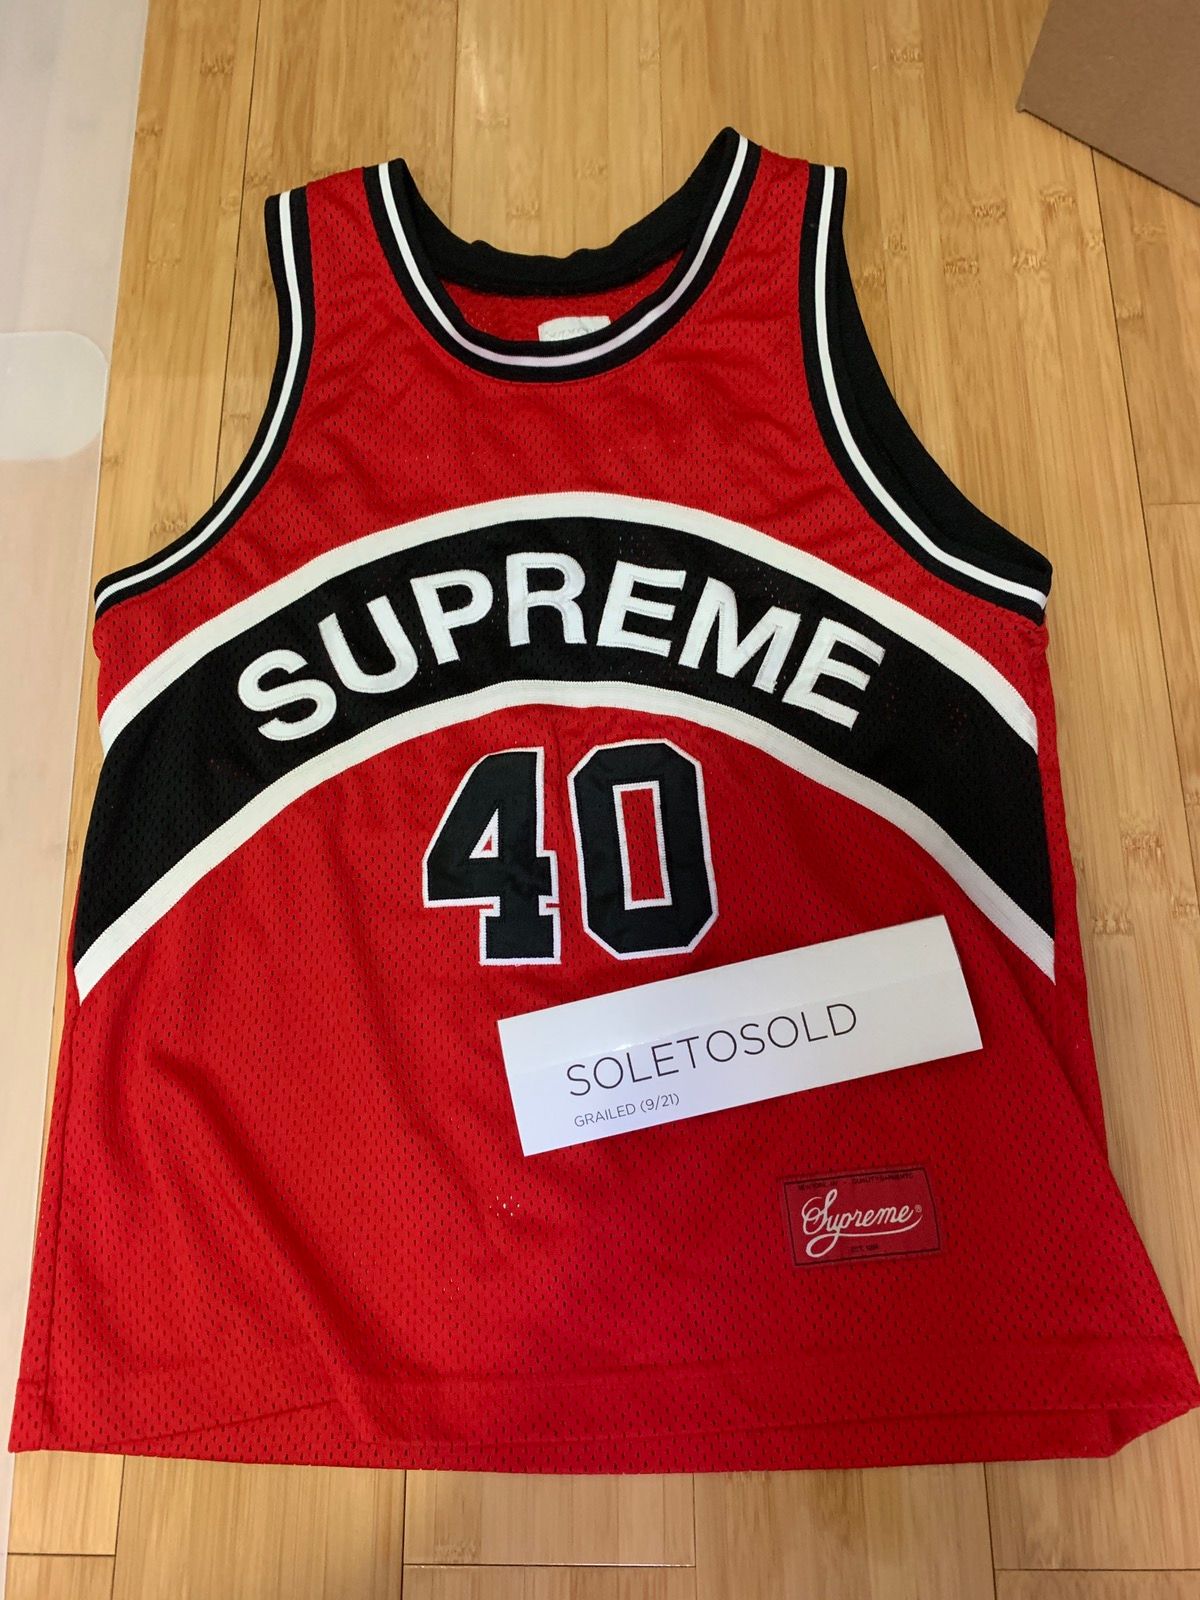 Supreme Supreme Basketball Jersey #40 - Sleeveless - M - Red/Black